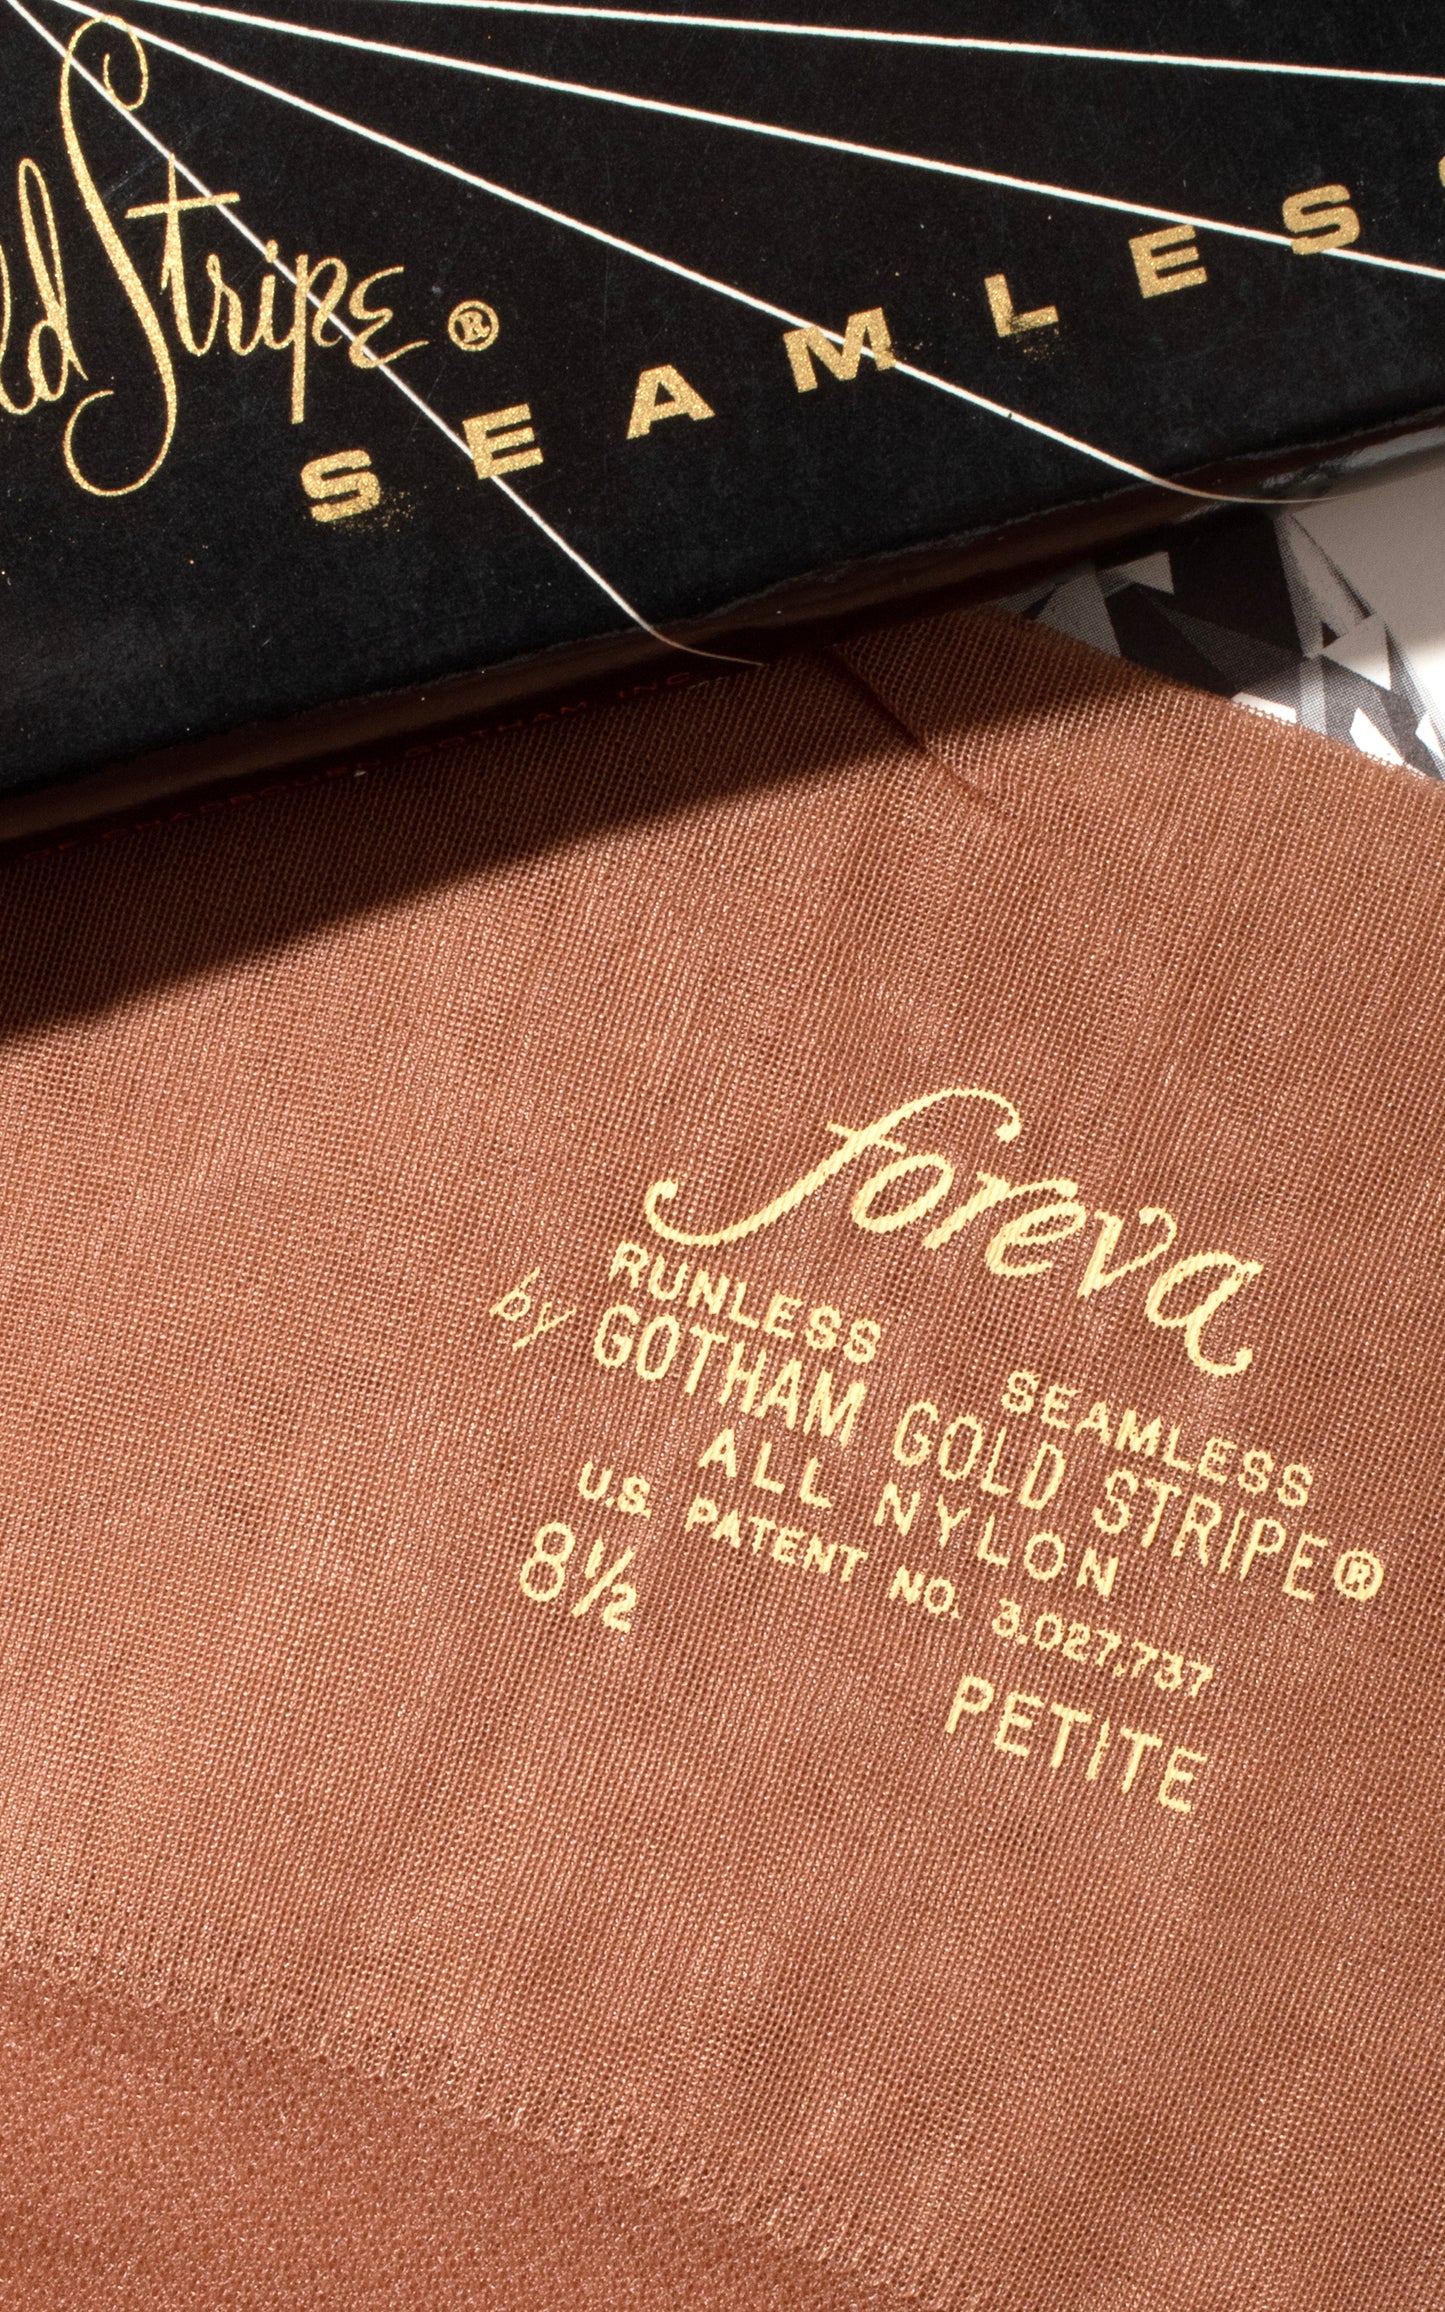 1960s Foreva Seamless Nylon Stockings x2 Pairs (size 8.5 short)